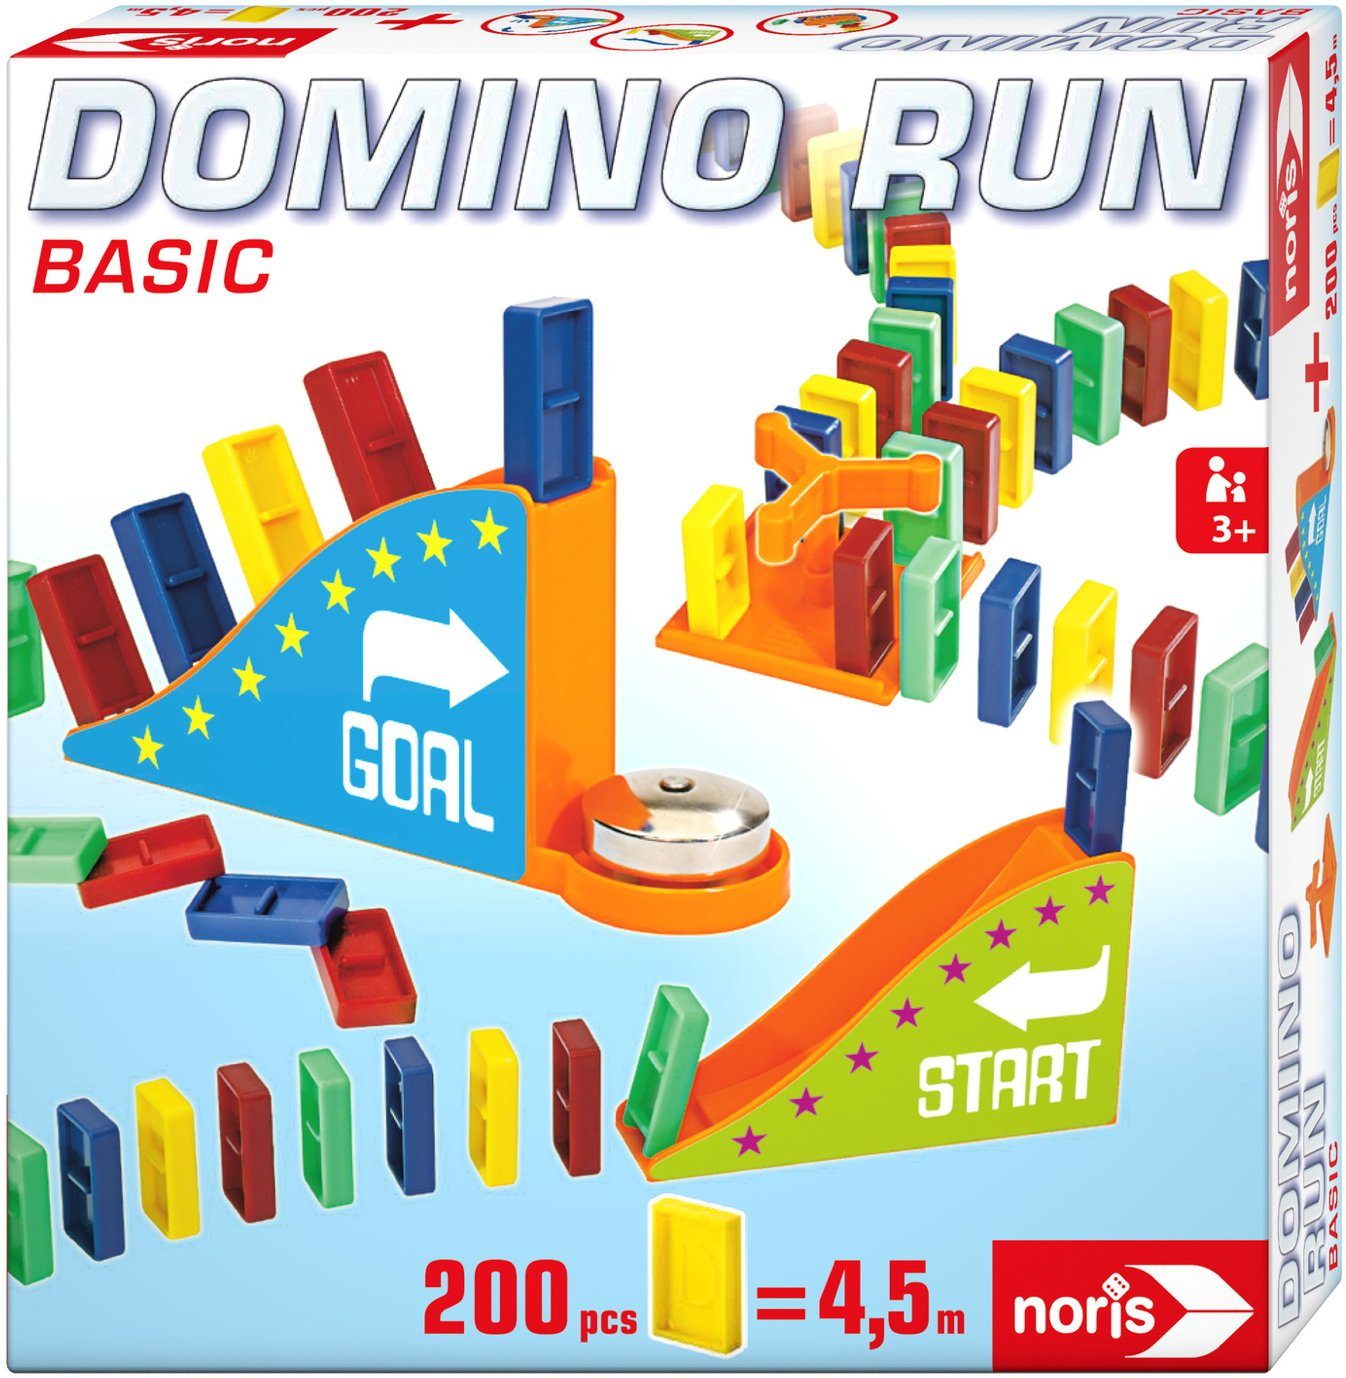 Run Noris Aktionsspiel Domino 606062022 Familienspiel Basic Spiel,